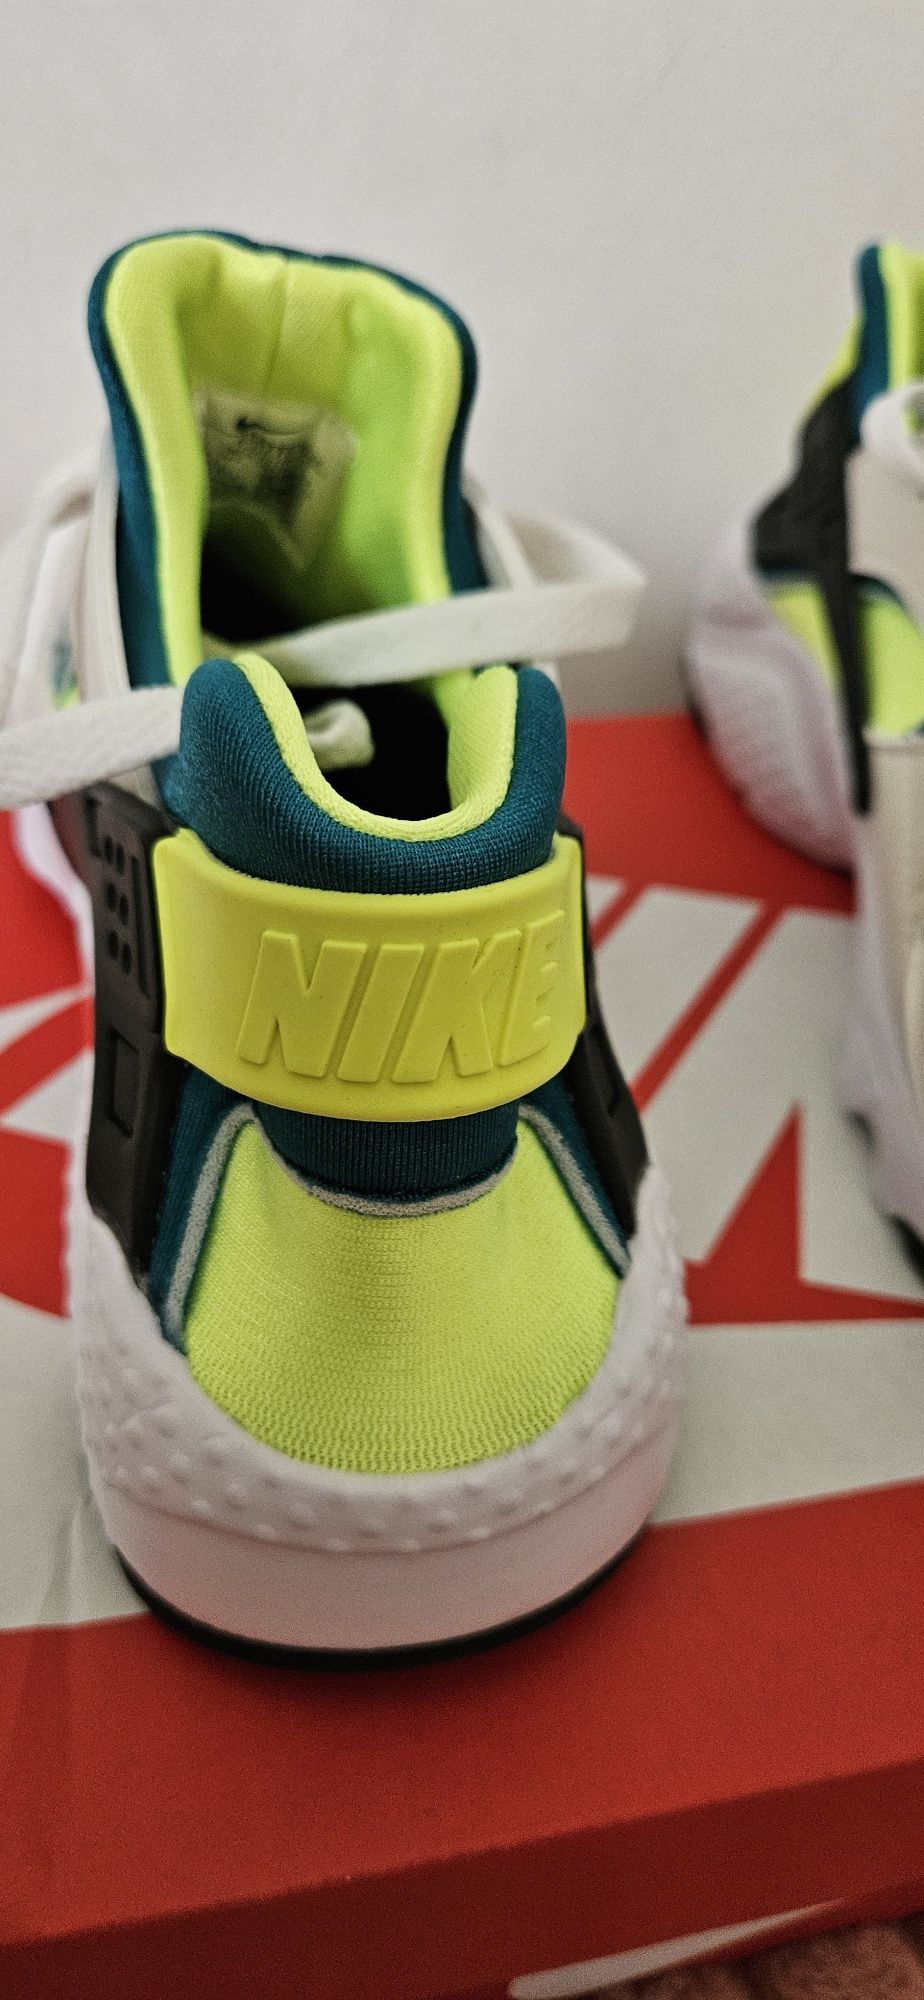 Adidași Nike noi